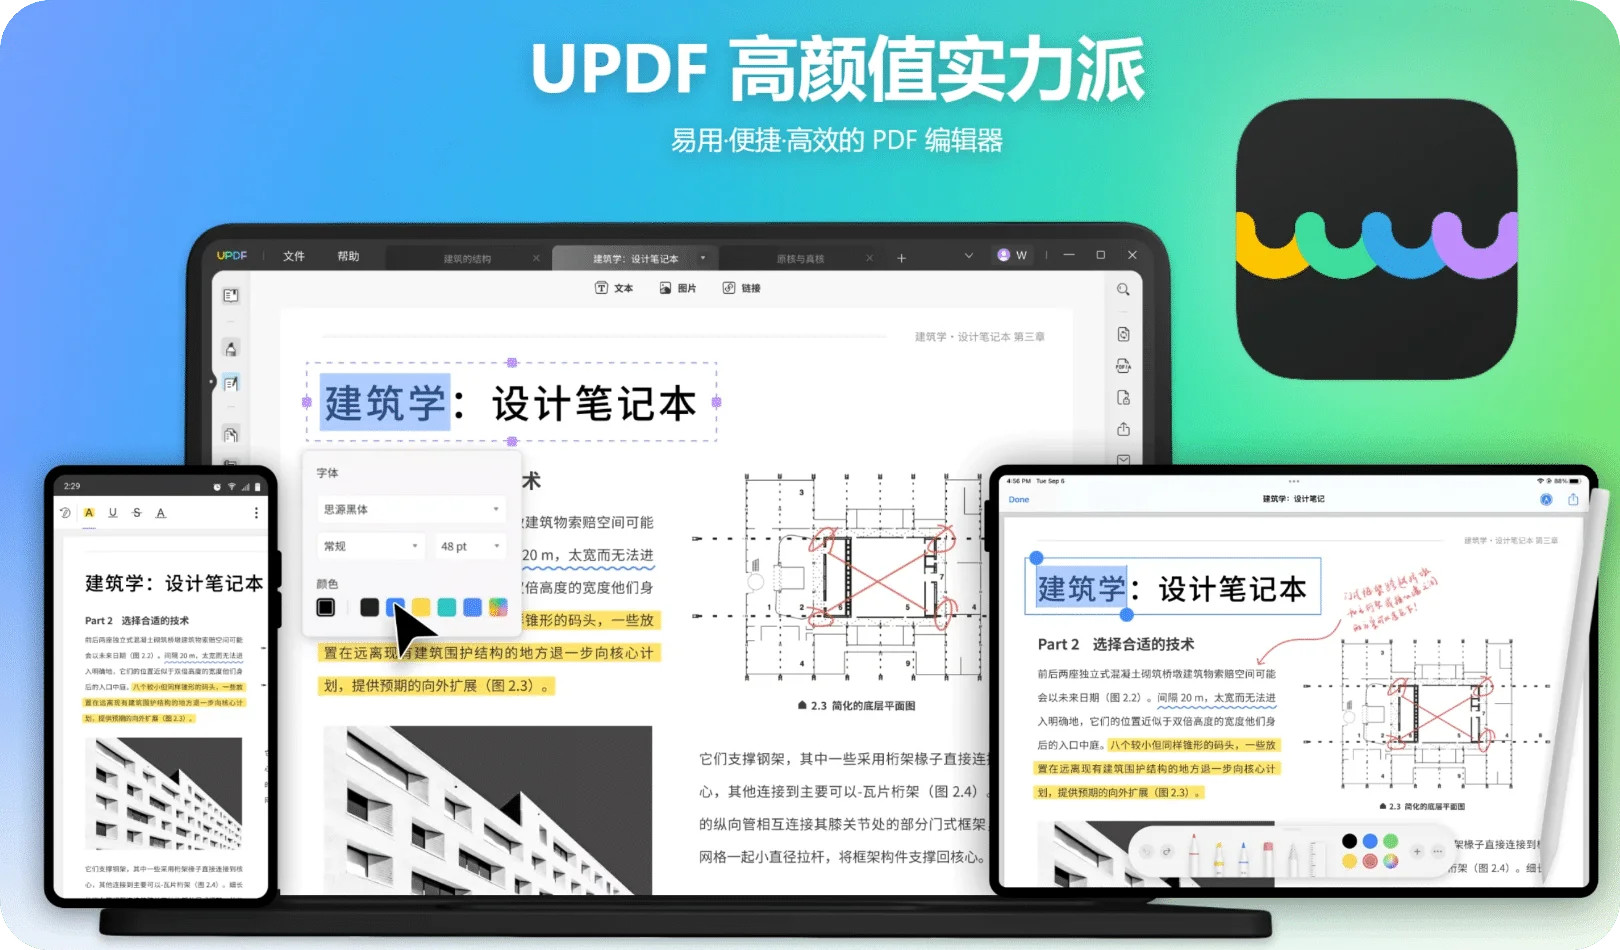 UPDF - 一款内置 AI 的 PDF 编辑器